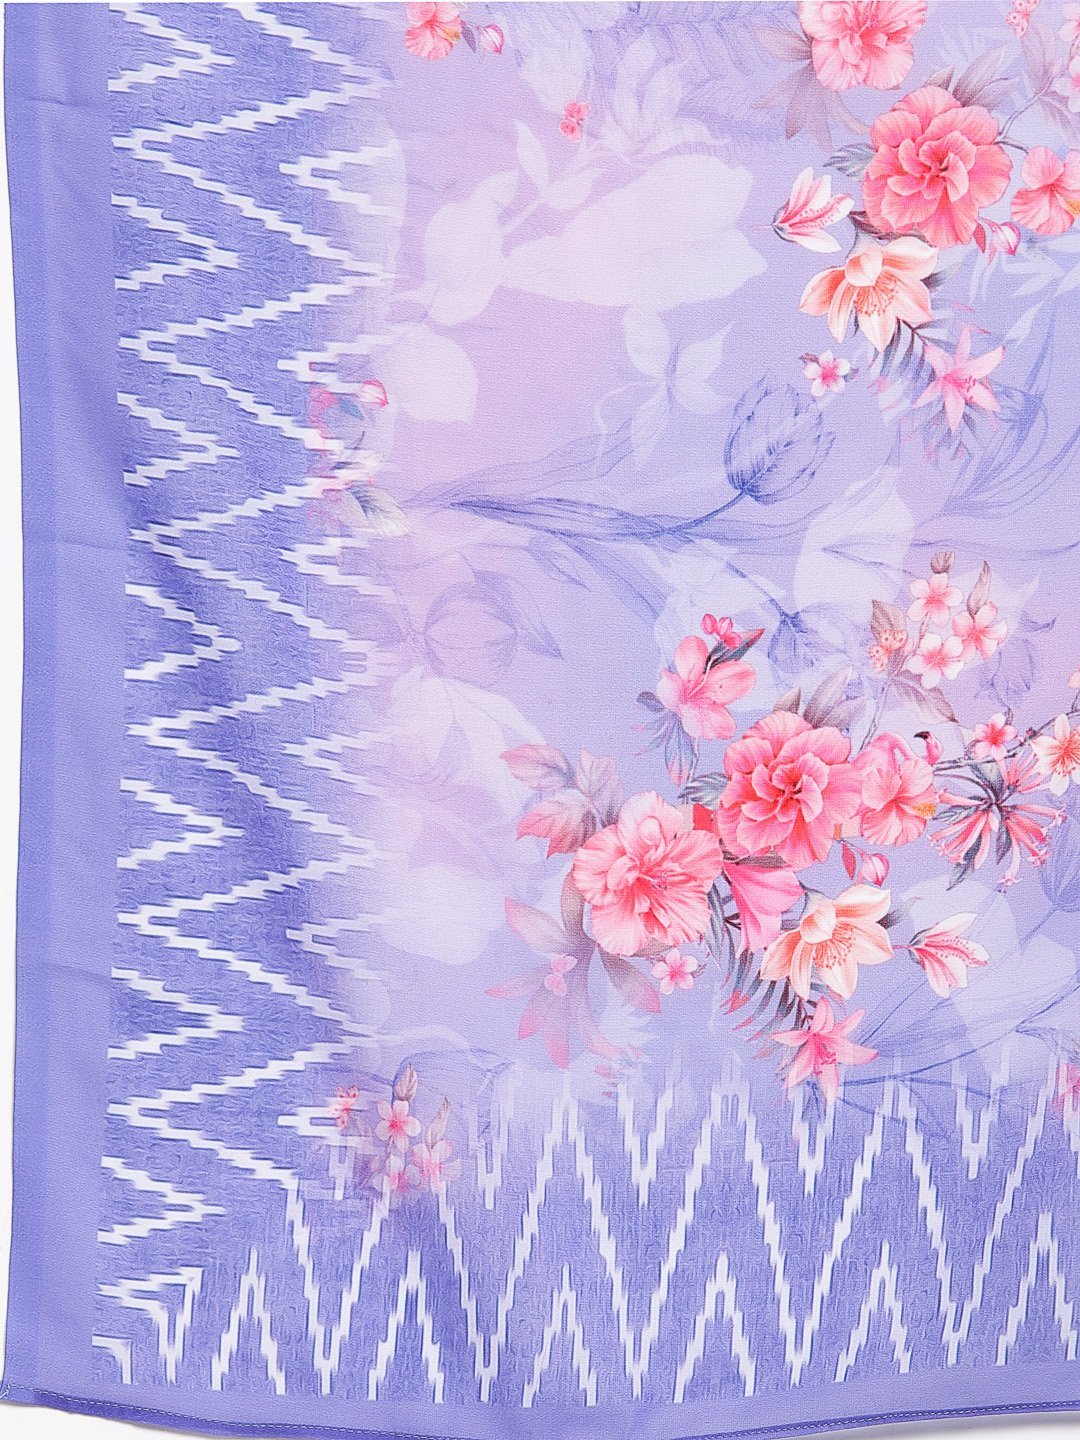 Women's Purple Silk Printed 3/4 Sleeve Round Neck Casual Anarkali Kurta Dupatta Set - Myshka